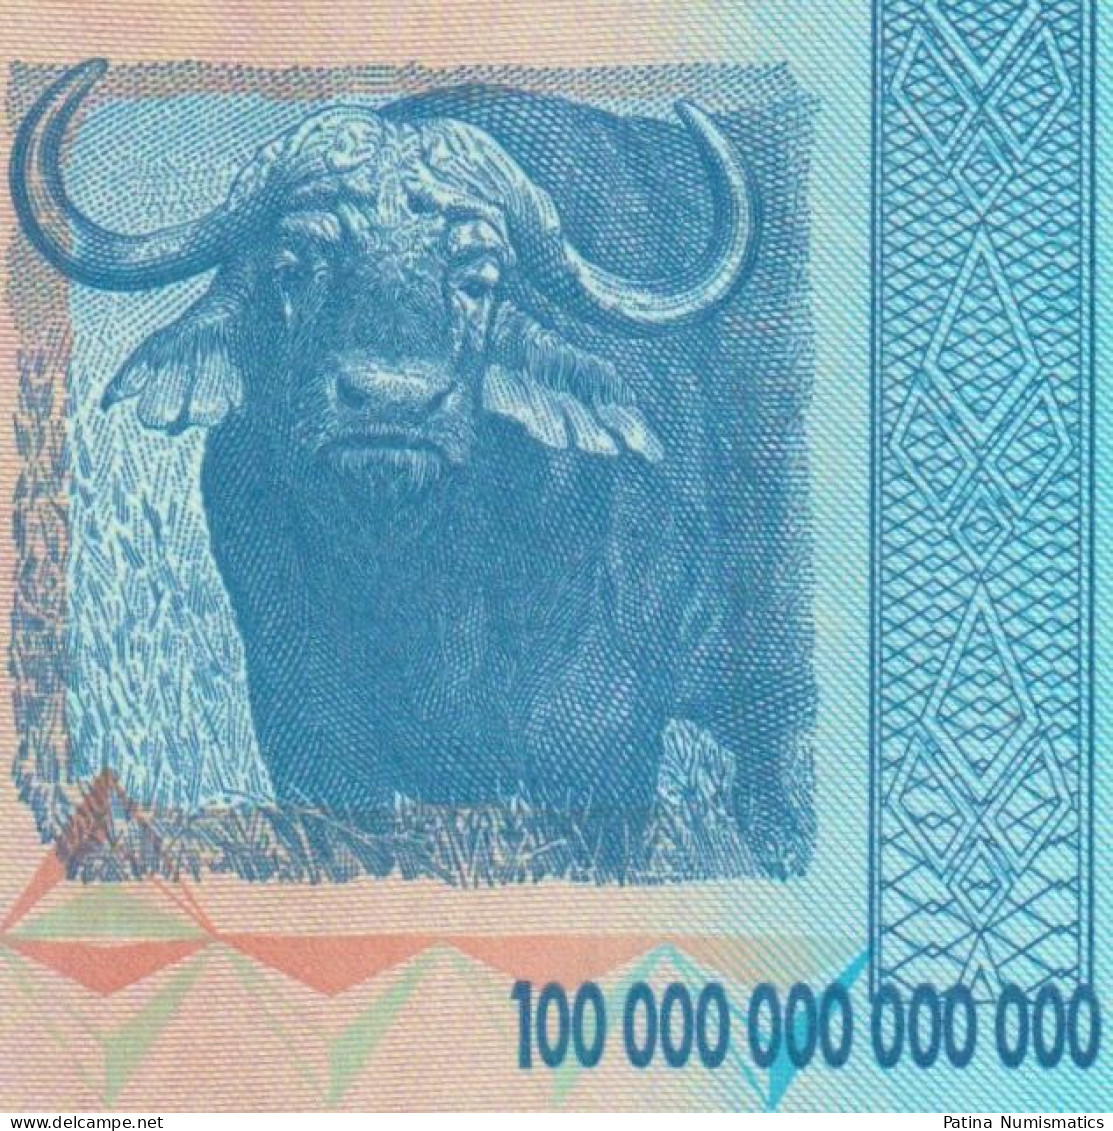 Zimbabwe 100 Trillion Dollars 2008 HYPERINFLATION P 91 AA Prefix Gem UNC - Zimbabwe